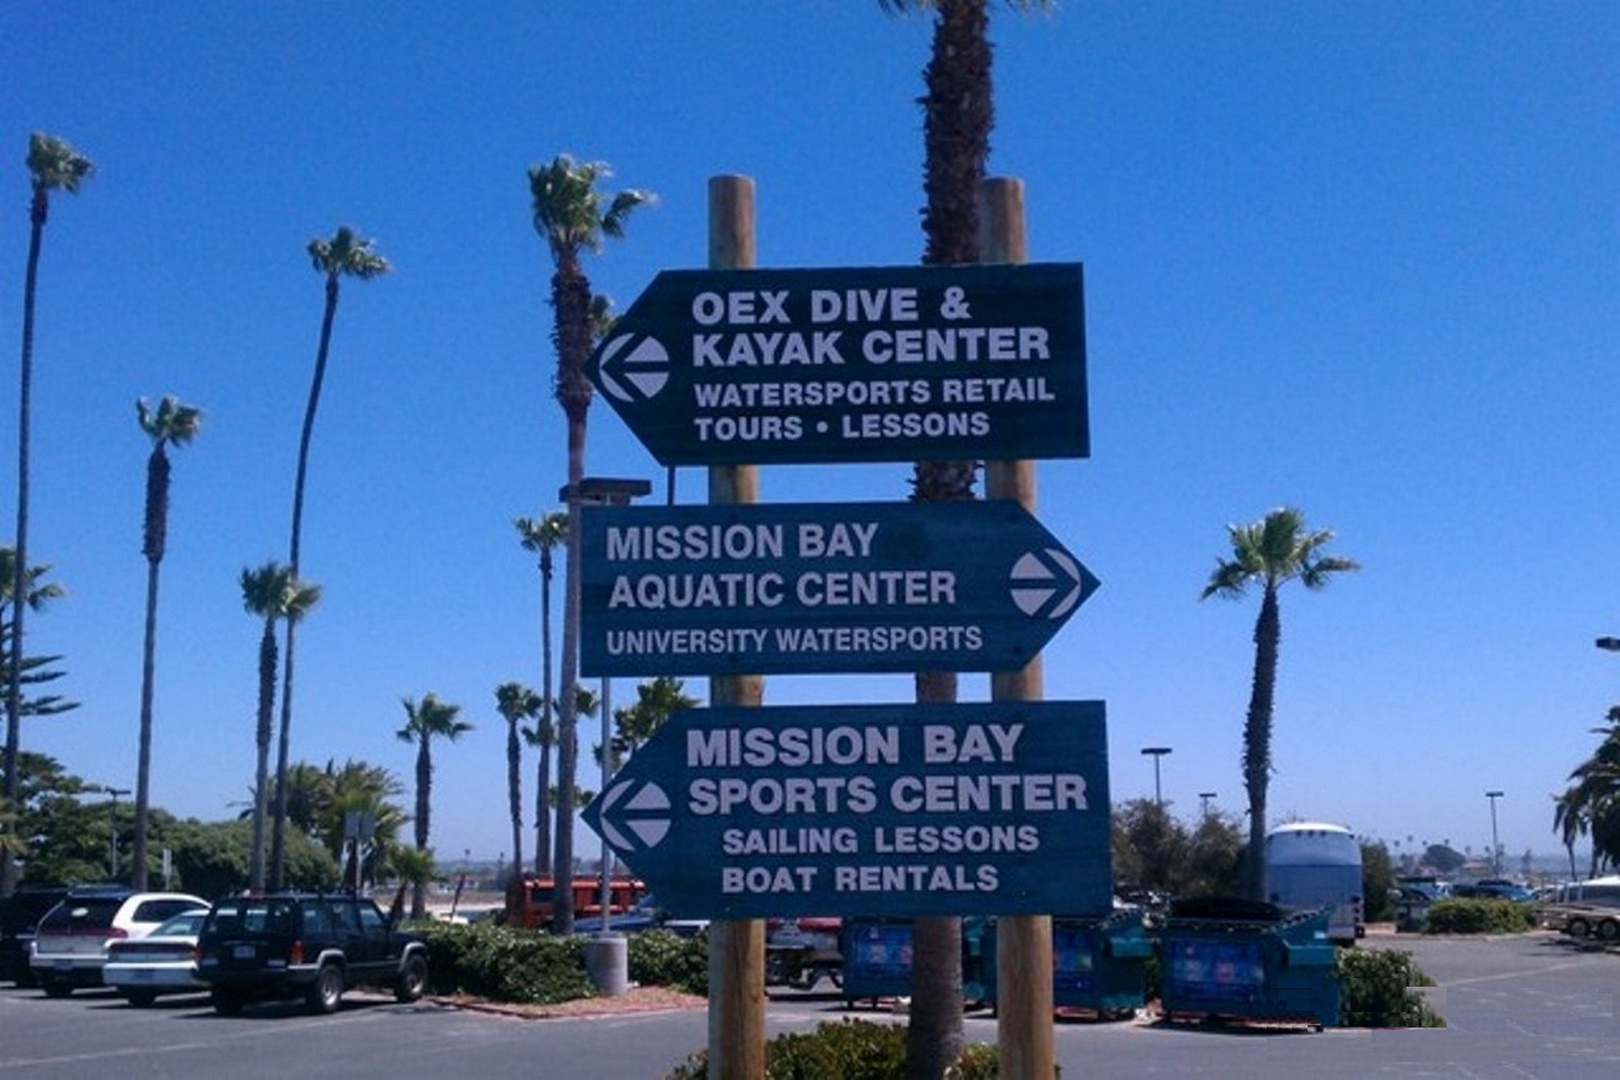 Next to the Mission Beach Aquatic Center